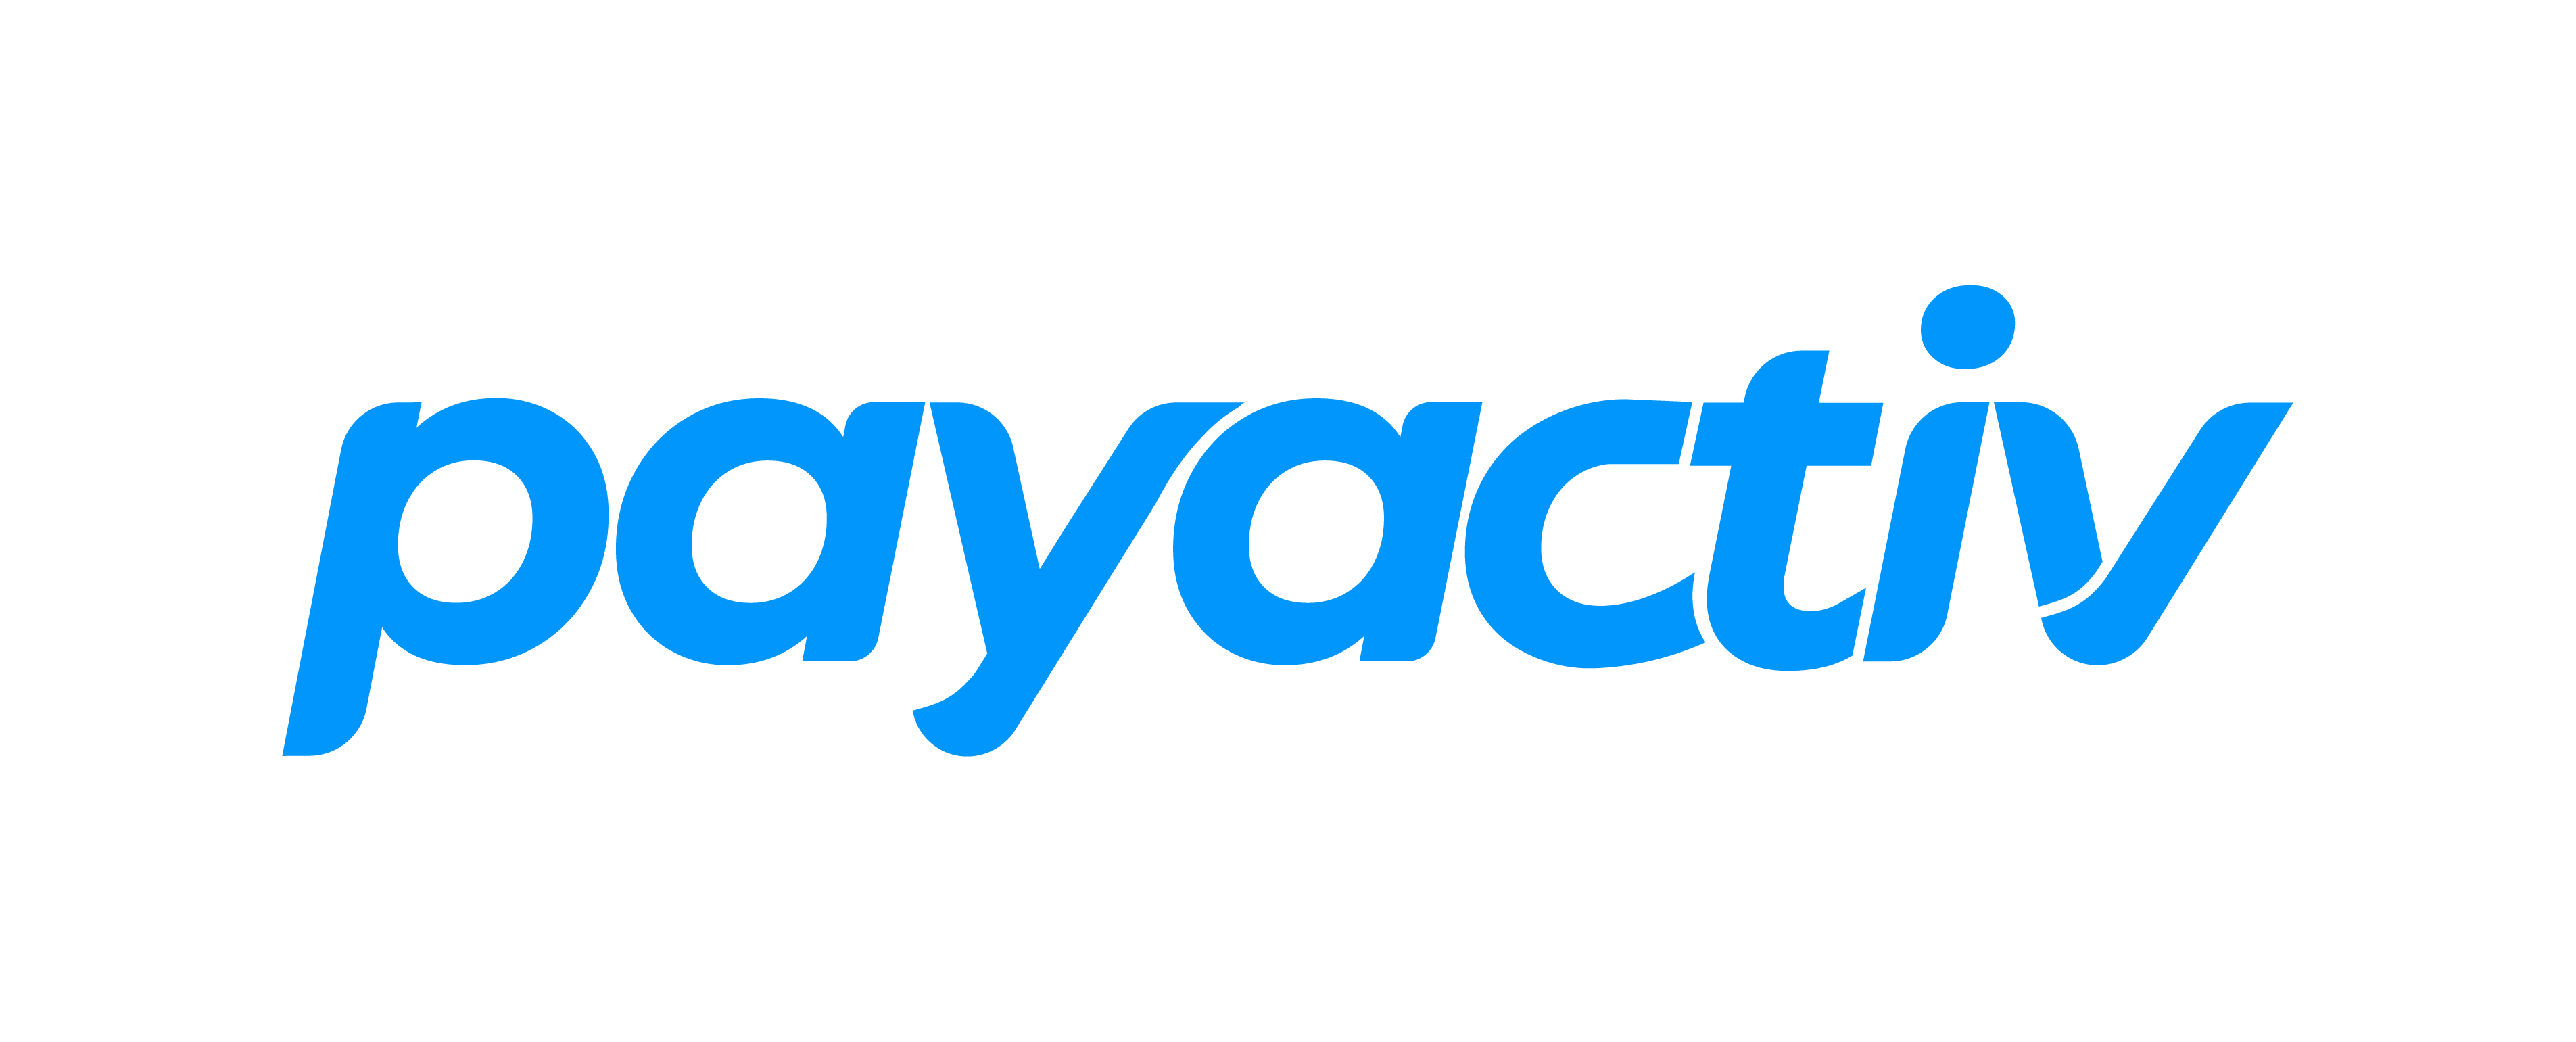 payactiv-logo